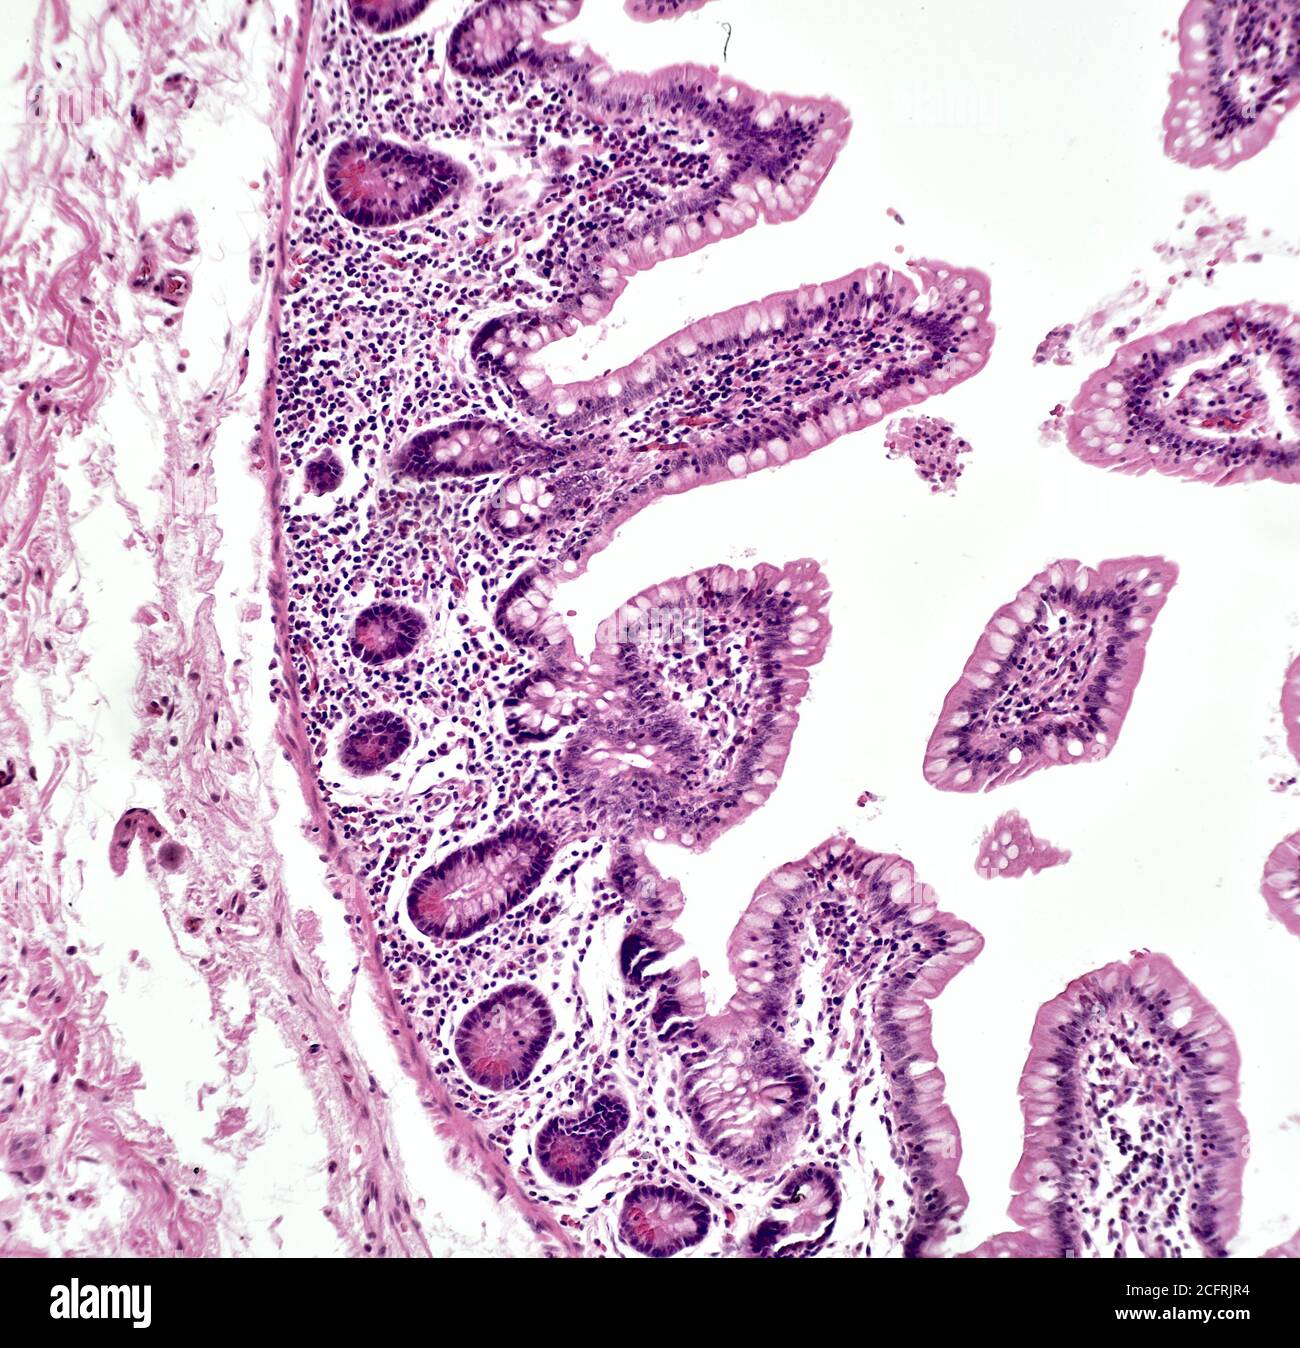 Intestinal cancer cells, brightfield photomicrograph Stock Photo